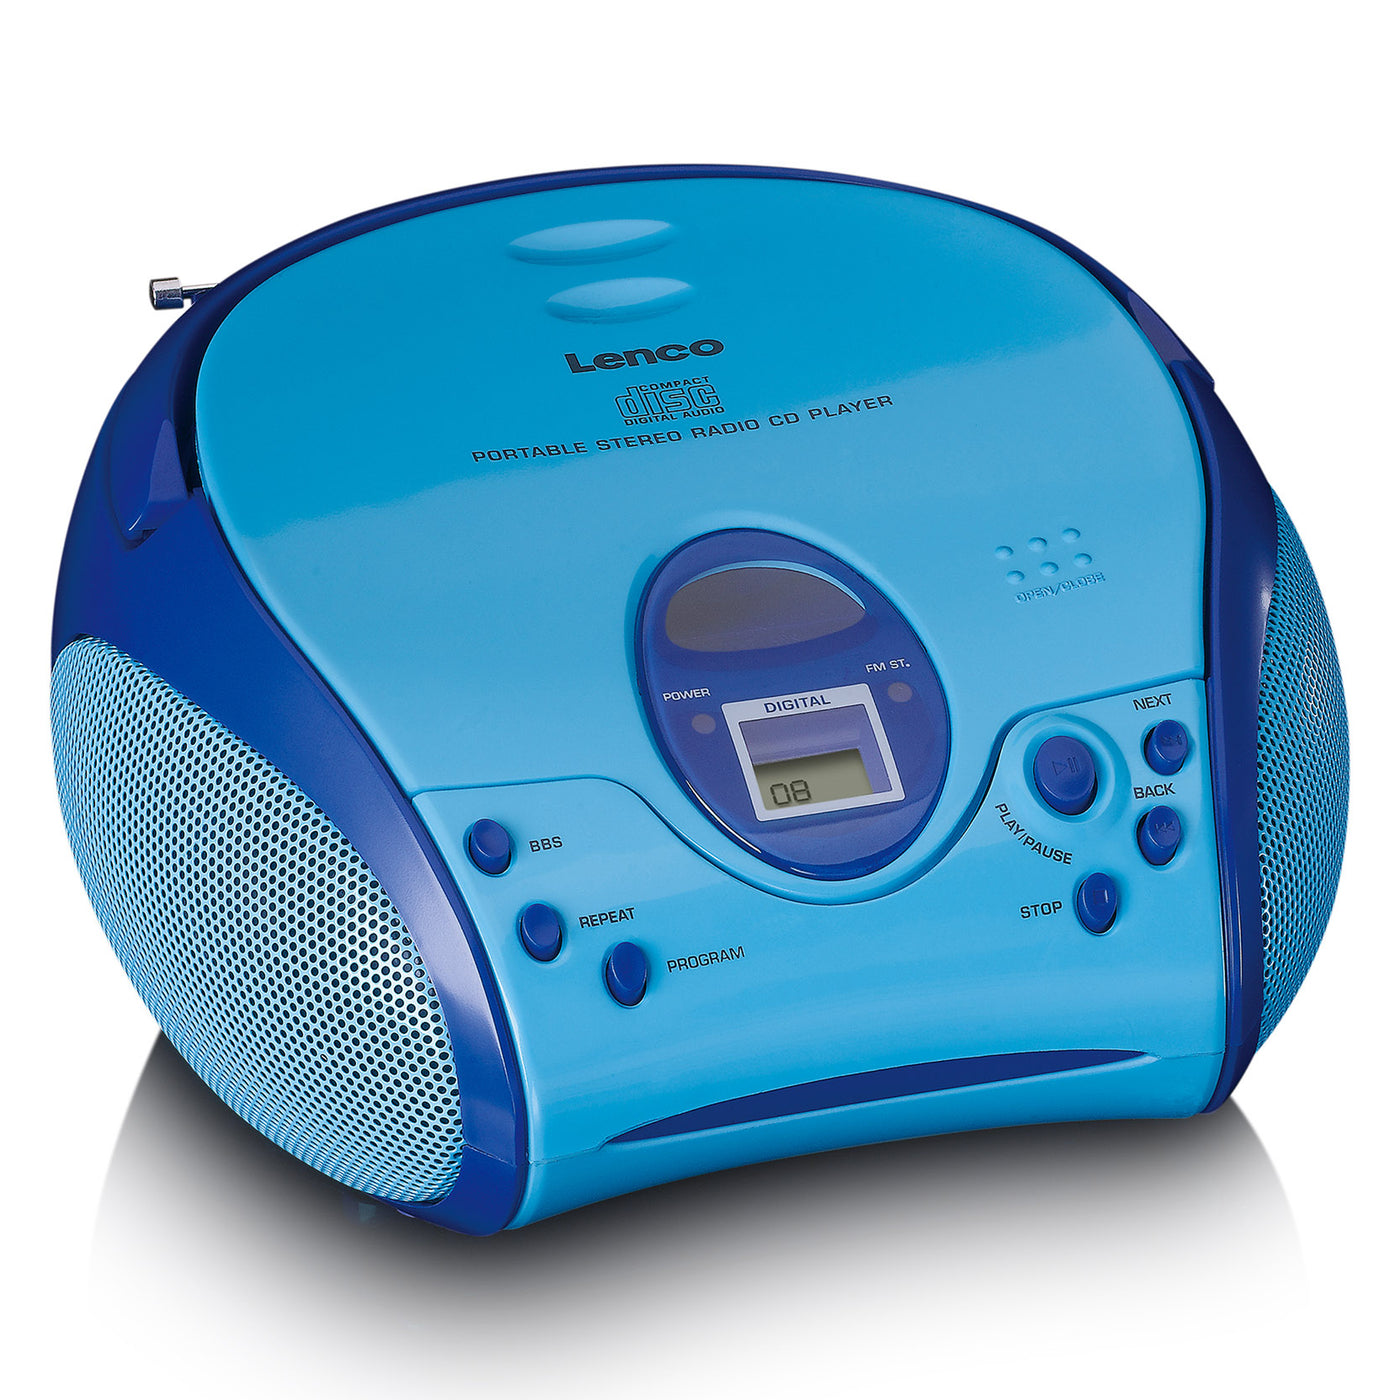 Lenco SCD-24BU kids - Radio portable avec lecteur CD - Bleu